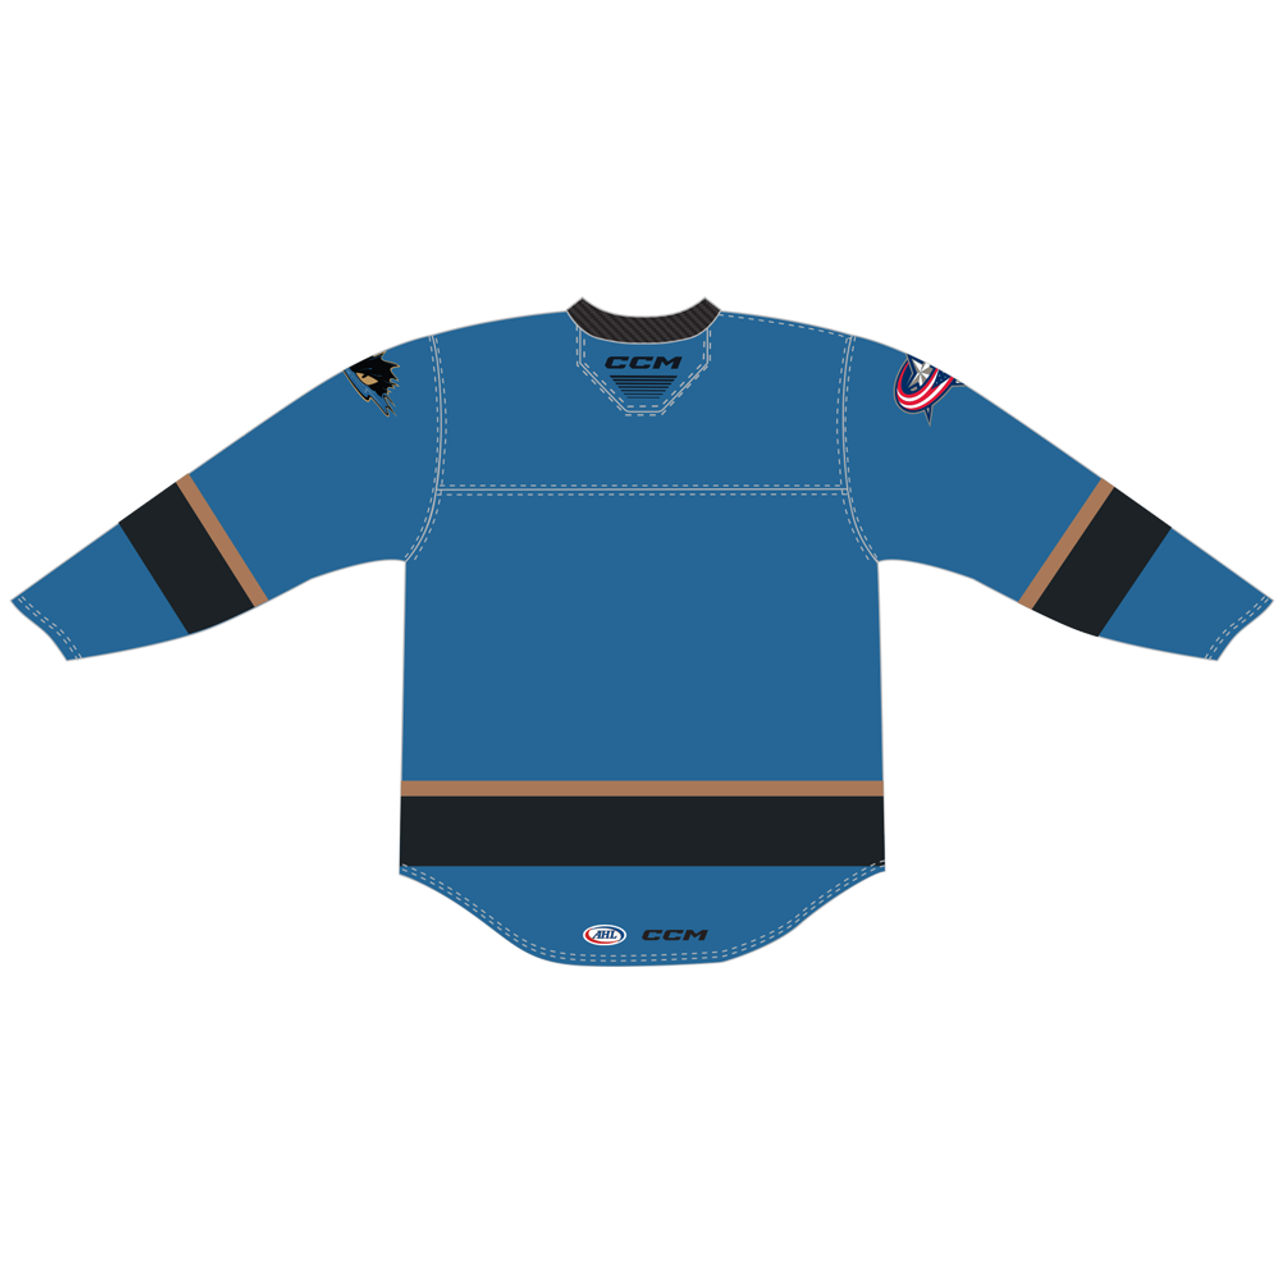 Kids Blues Ice Hockey Shirts, Jerseys